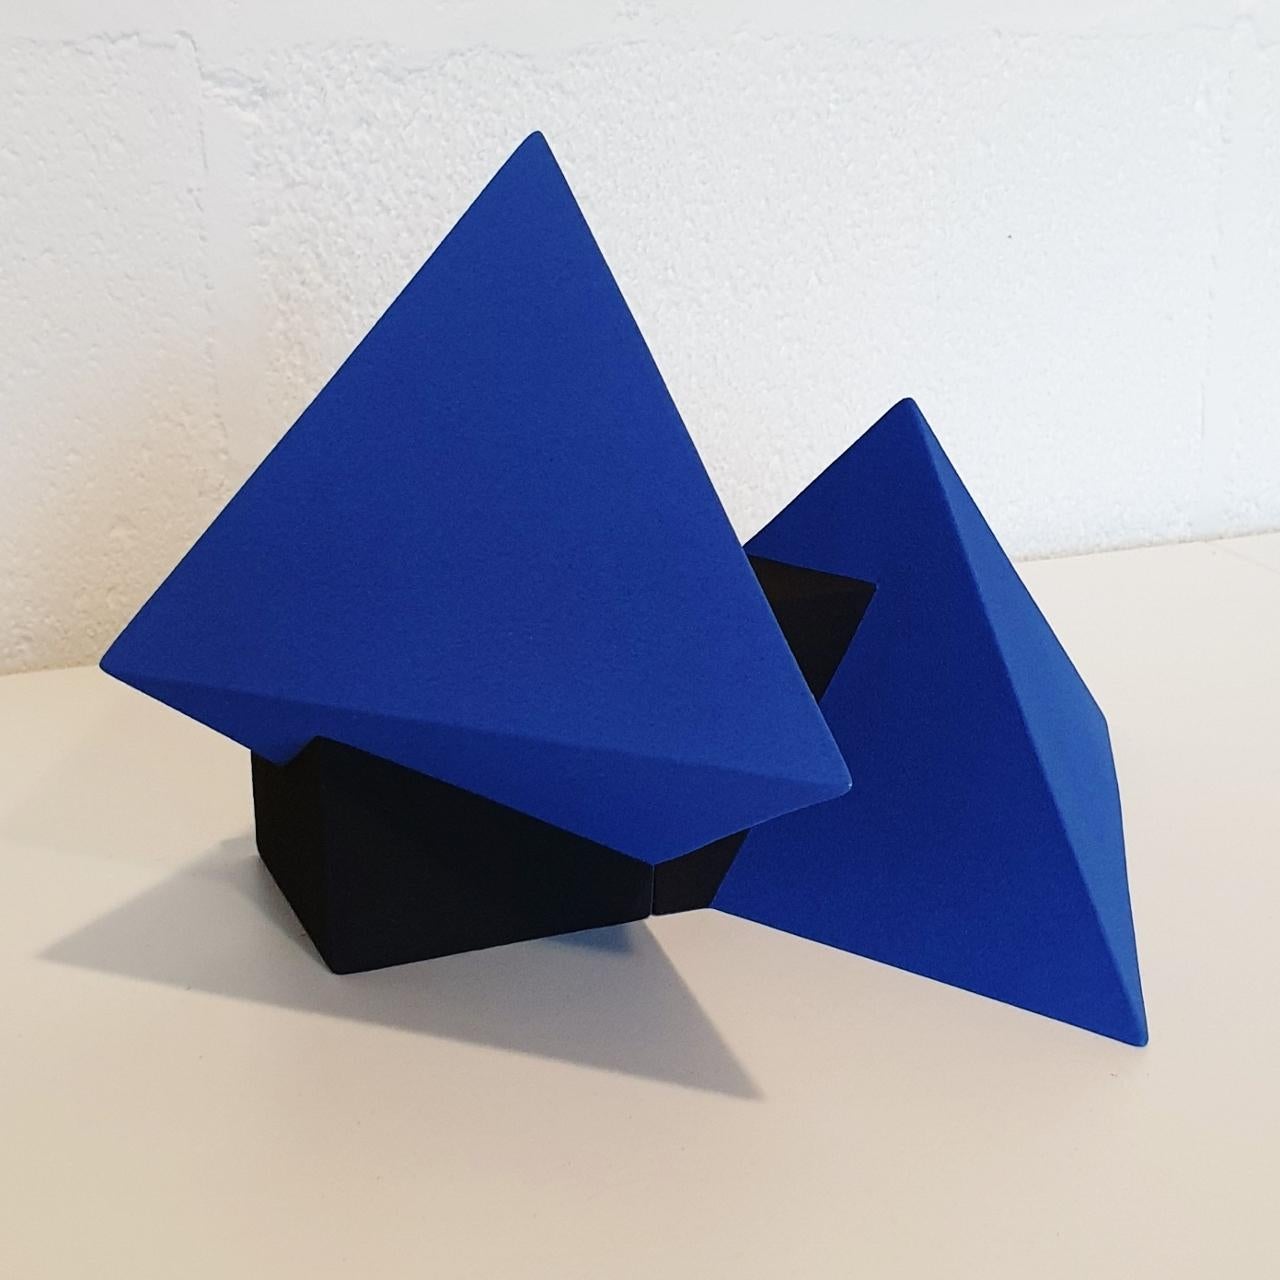 SC1502 blue - contemporary modern abstract geometric ceramic object sculpture - Contemporary Sculpture by Let de Kok